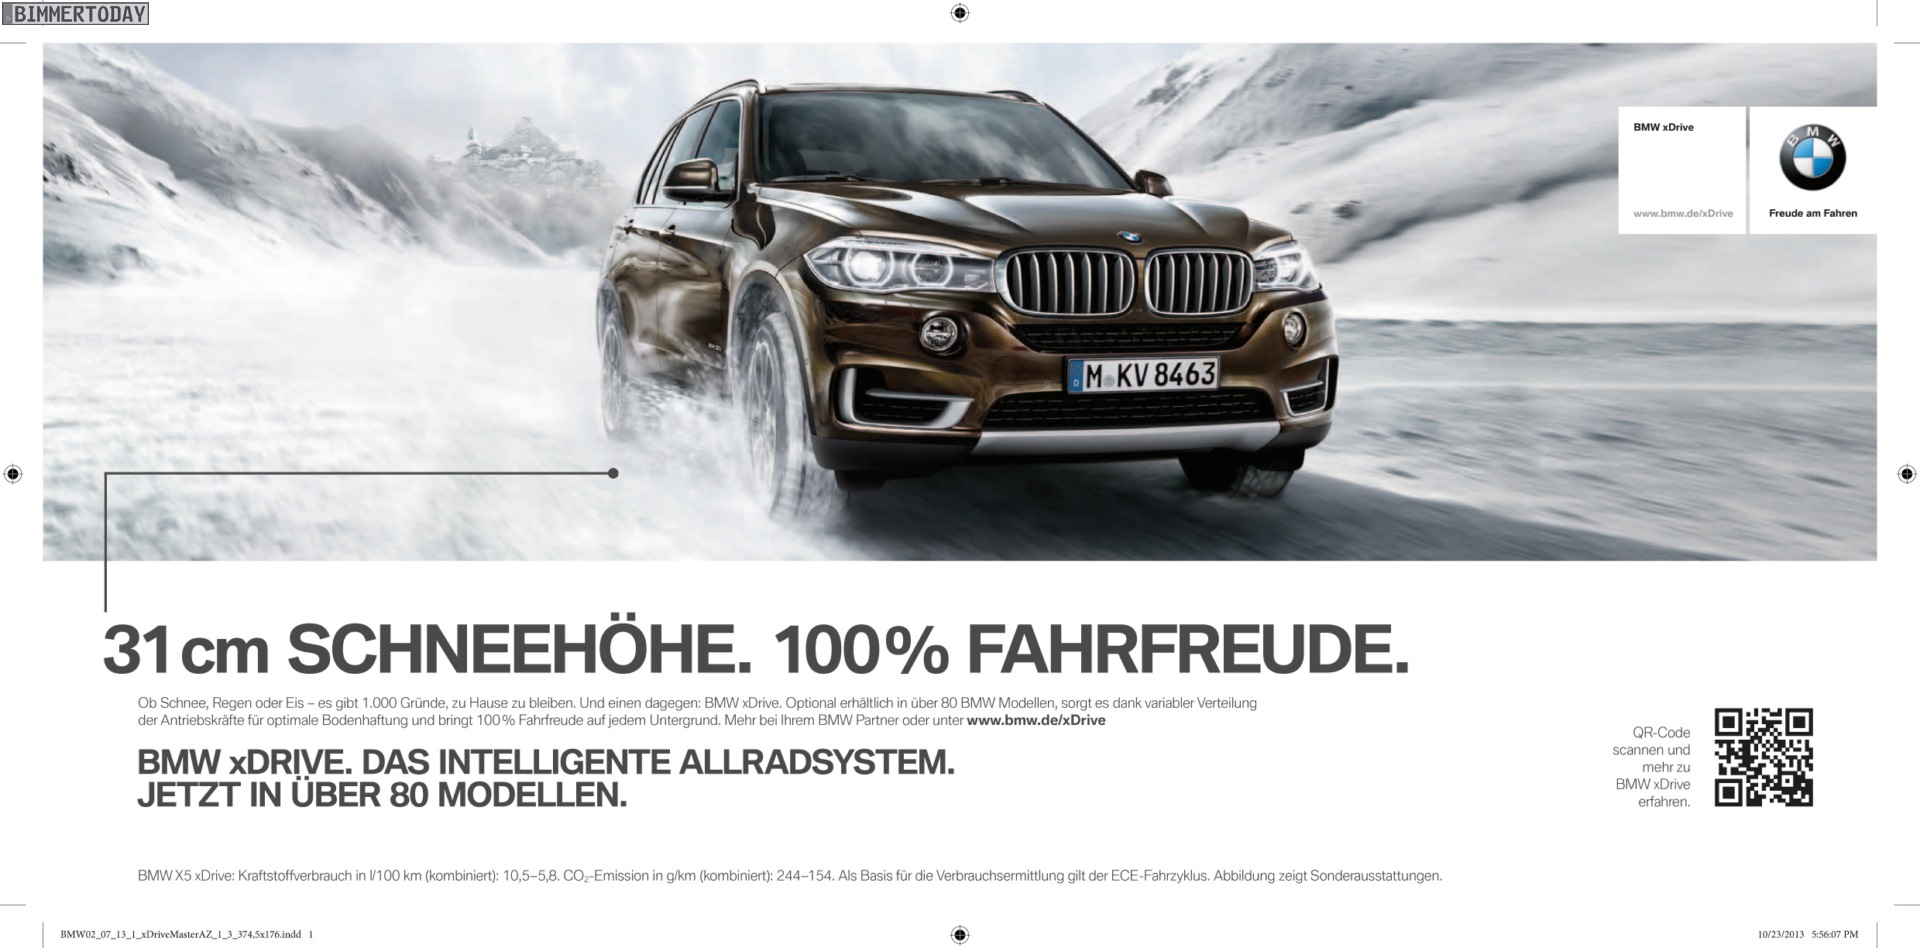 Marketing Localization: German BMW Advert